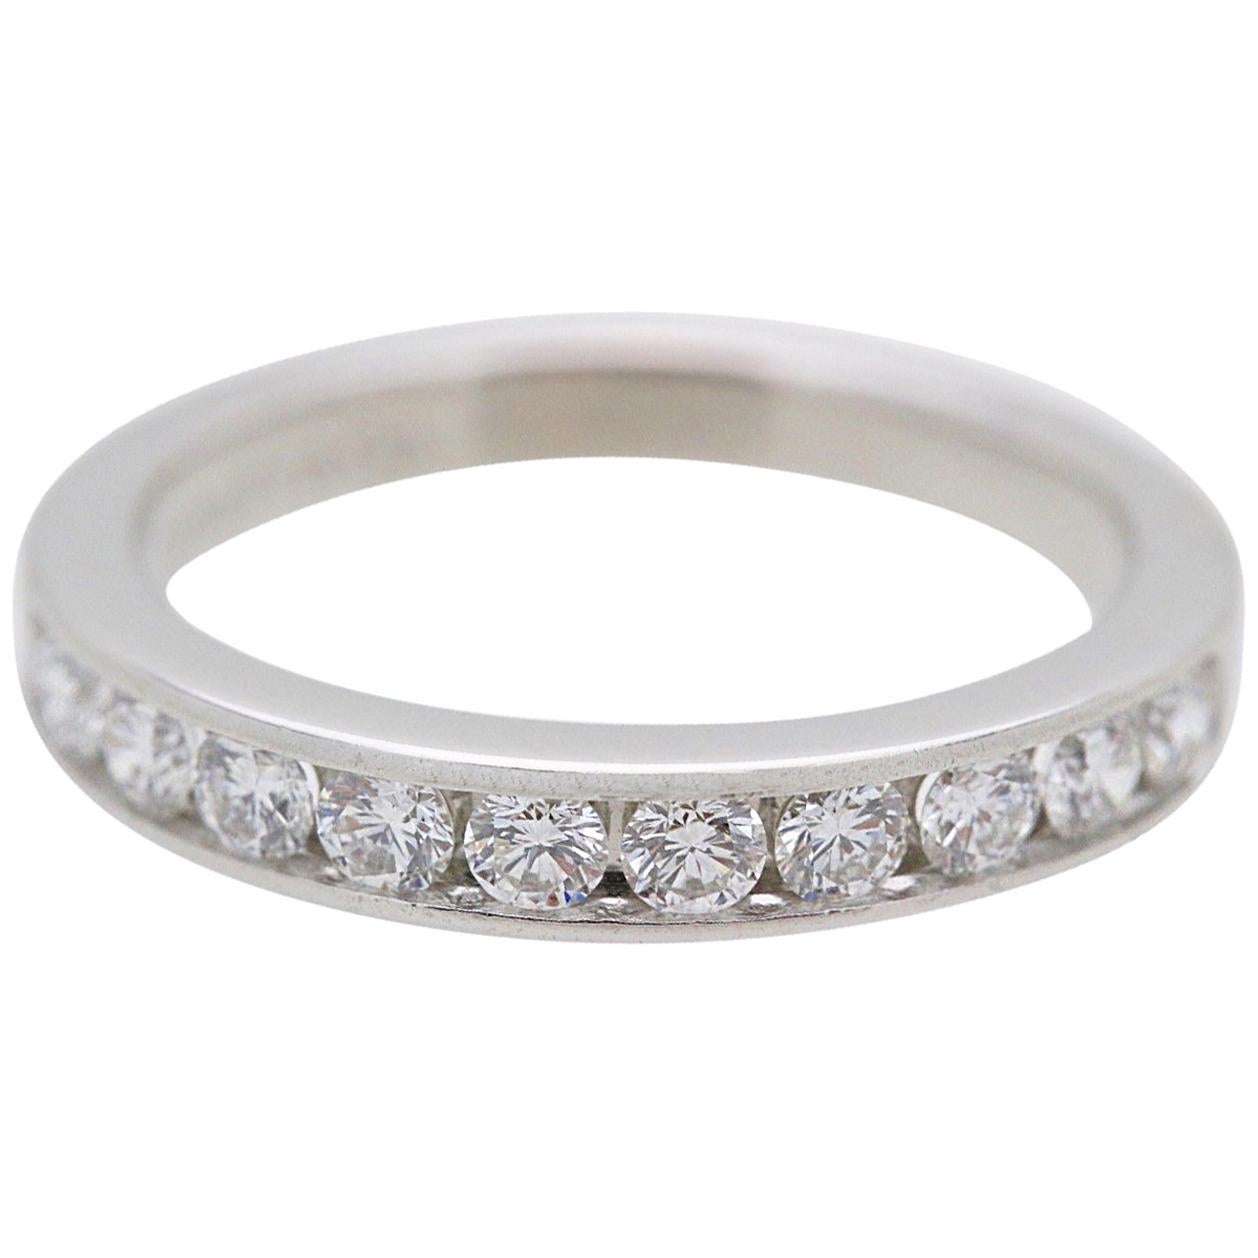 Tiffany & Co. Platinum and Diamond Wedding Band Ring 2.5 MM